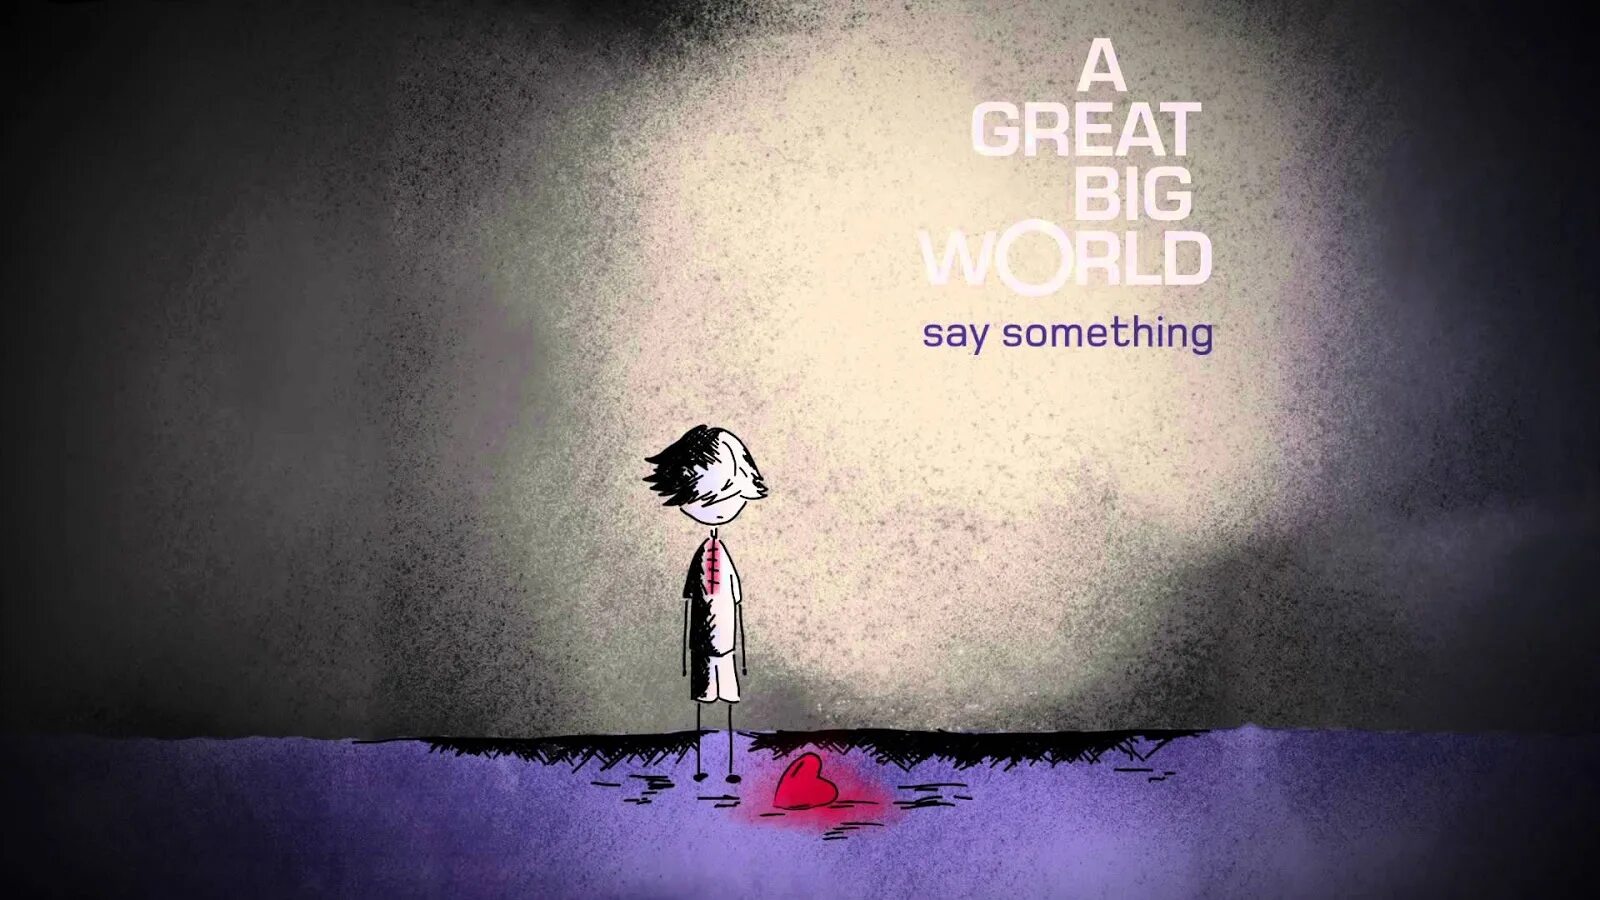 Say something words. Say something!. Big World. Say something a great big World текст. A great big World.